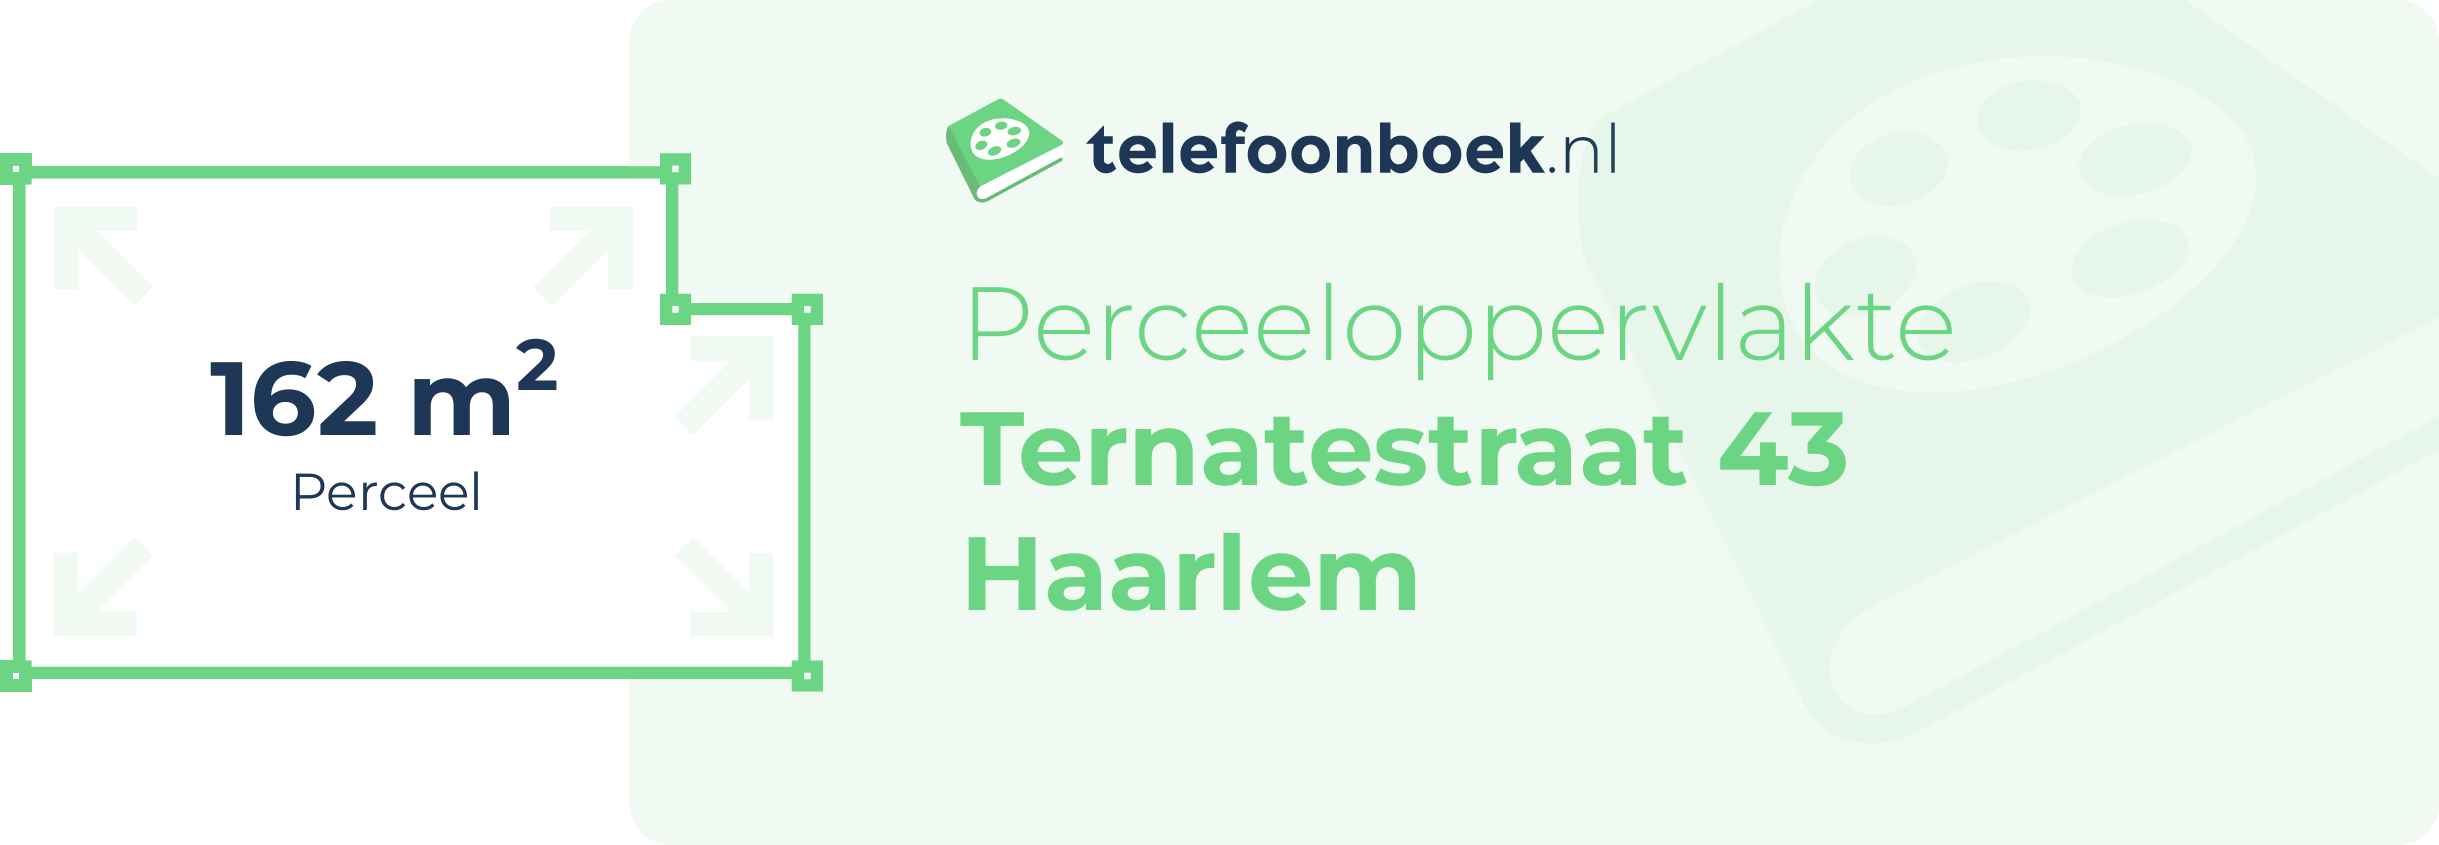 Perceeloppervlakte Ternatestraat 43 Haarlem